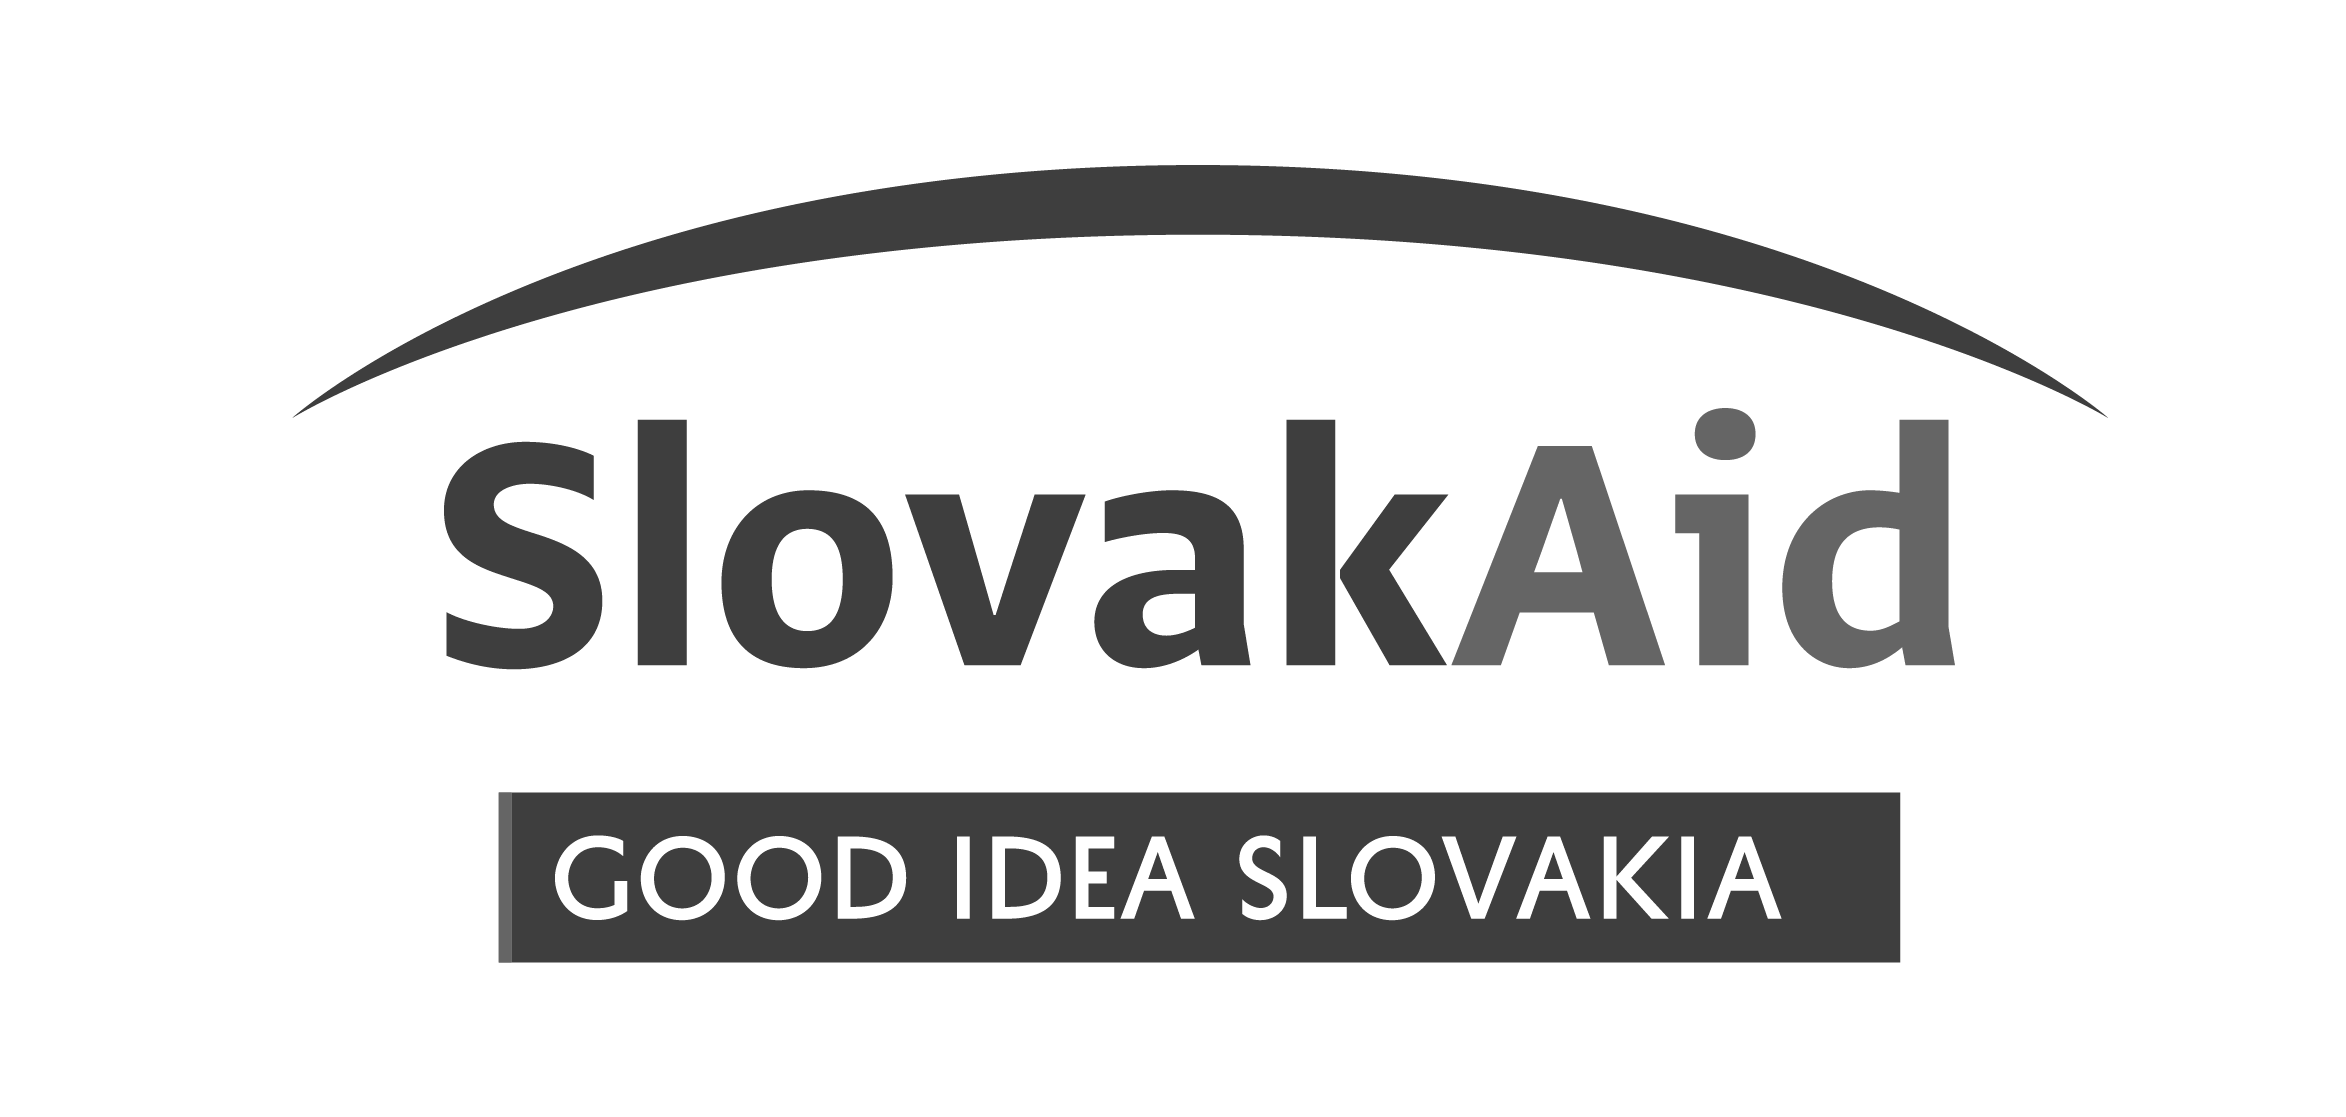 Logo Slovak Aid